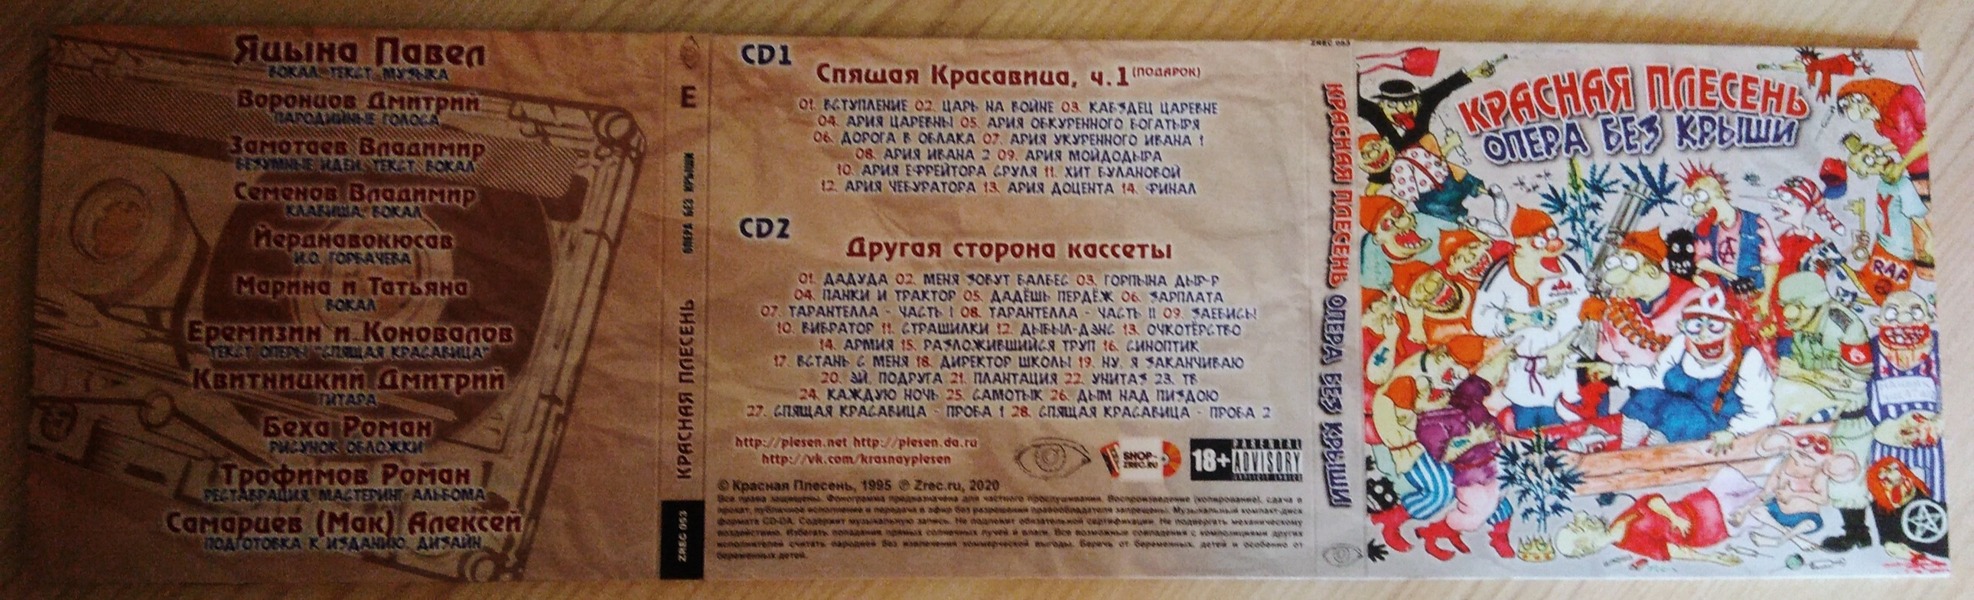 Красная Плесень — Опера без крыши (2CD)